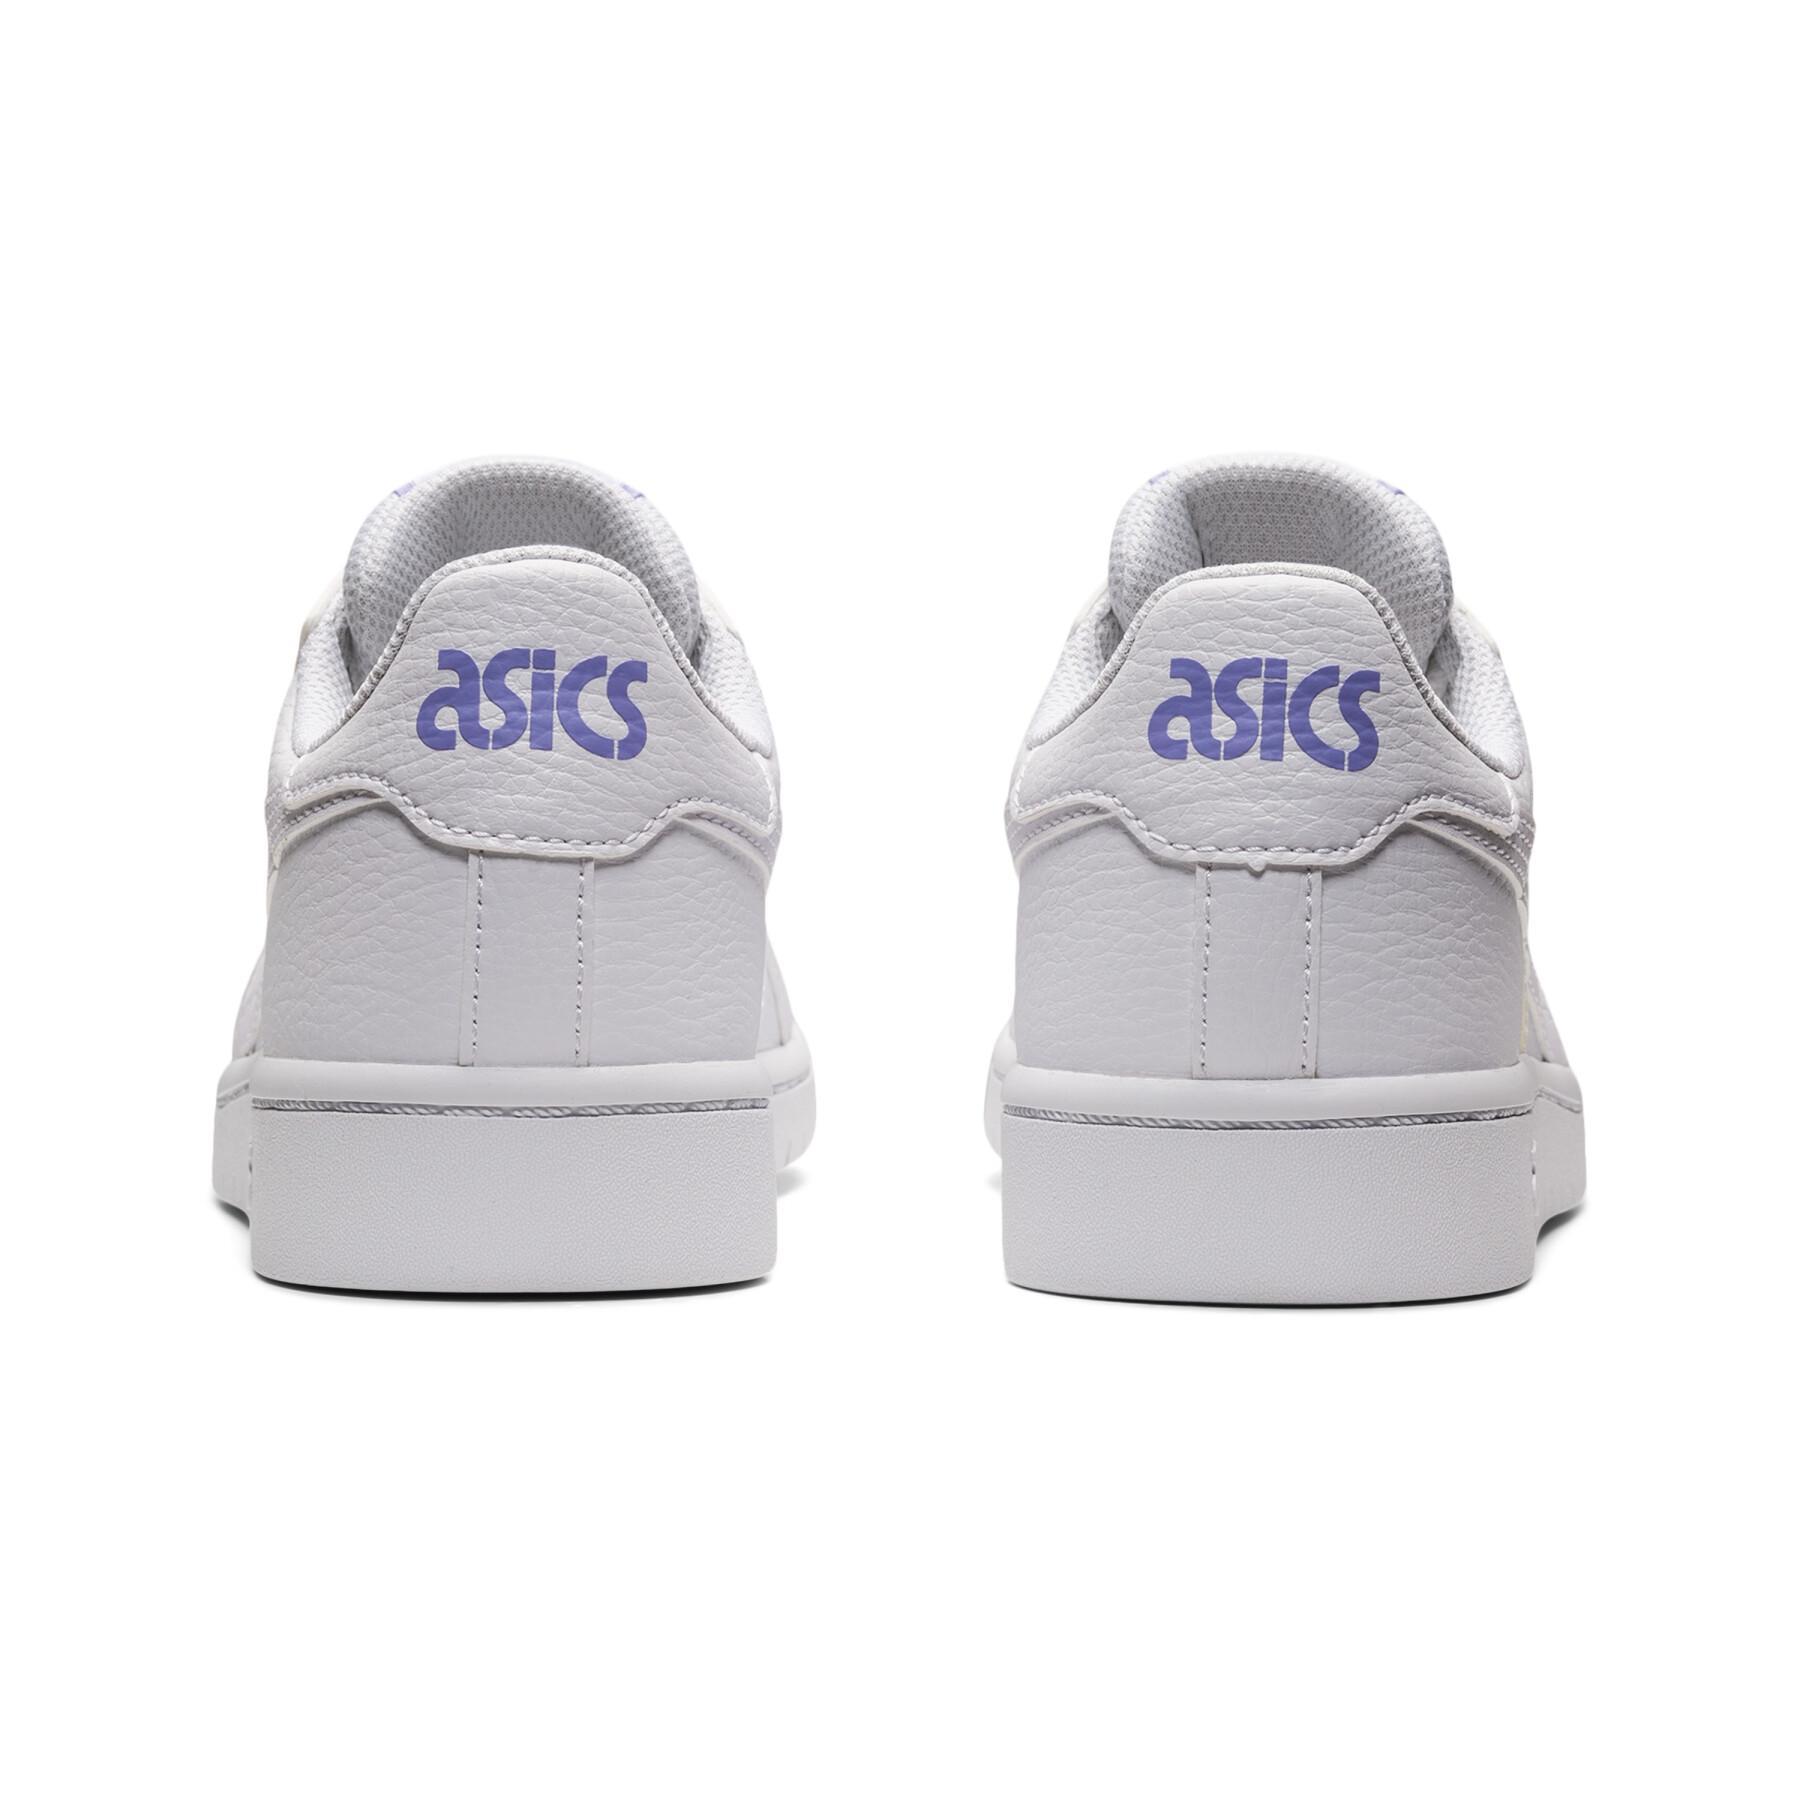 Zapatos para niños Asics Japan S Gs